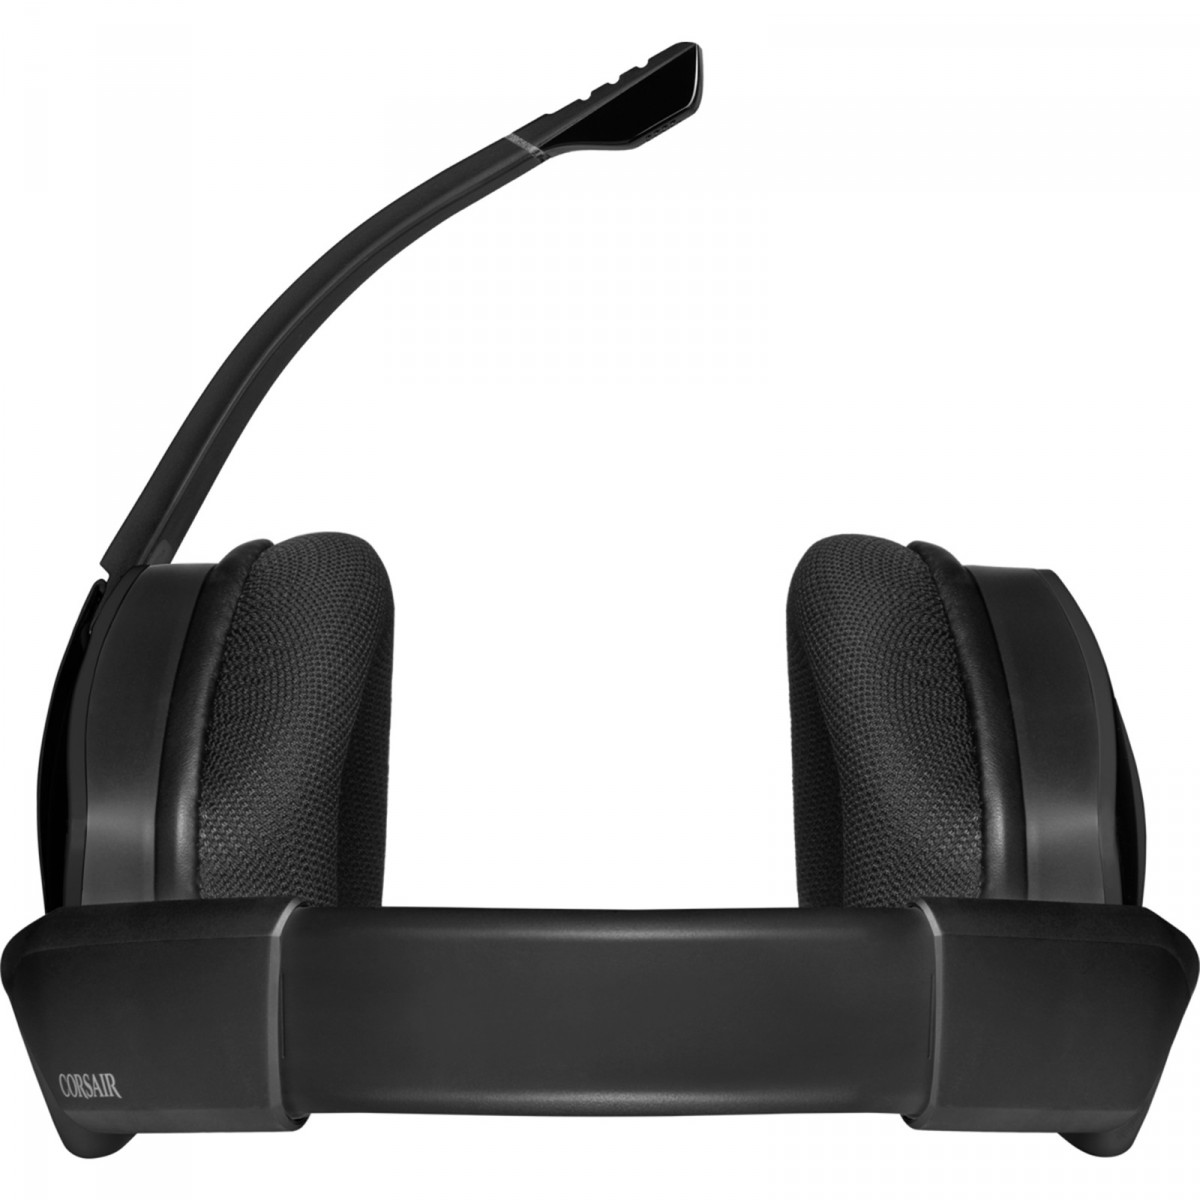 Headset Gamer Corsair Void Elite Surround, USB + 3.5mm, PC, PlayStation 4, Dispositivos Móveis, Switch, Xbox One, Carbon, CA-9011205-NA